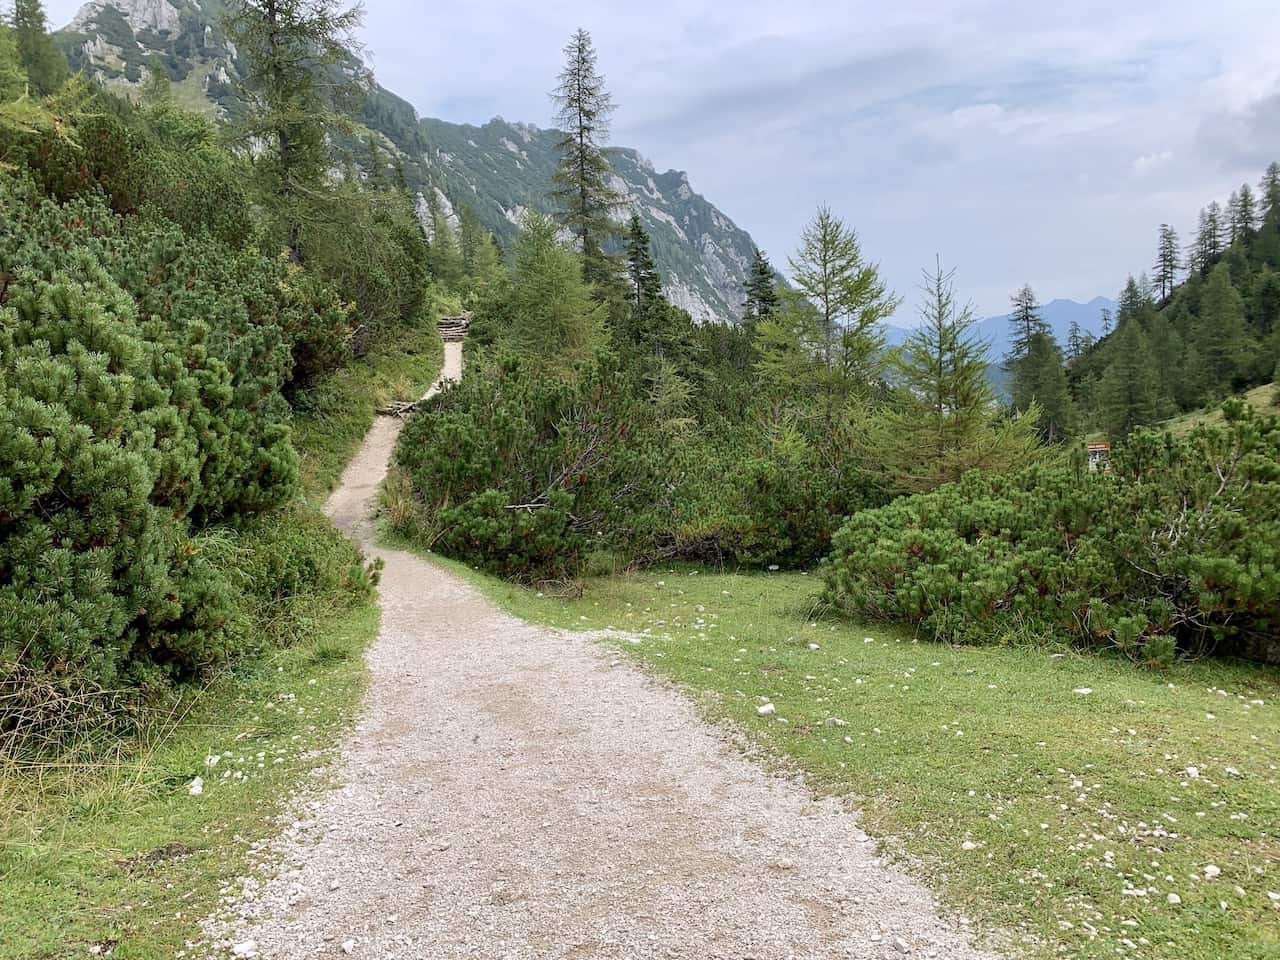 Vrsic Pass Hiking Trail